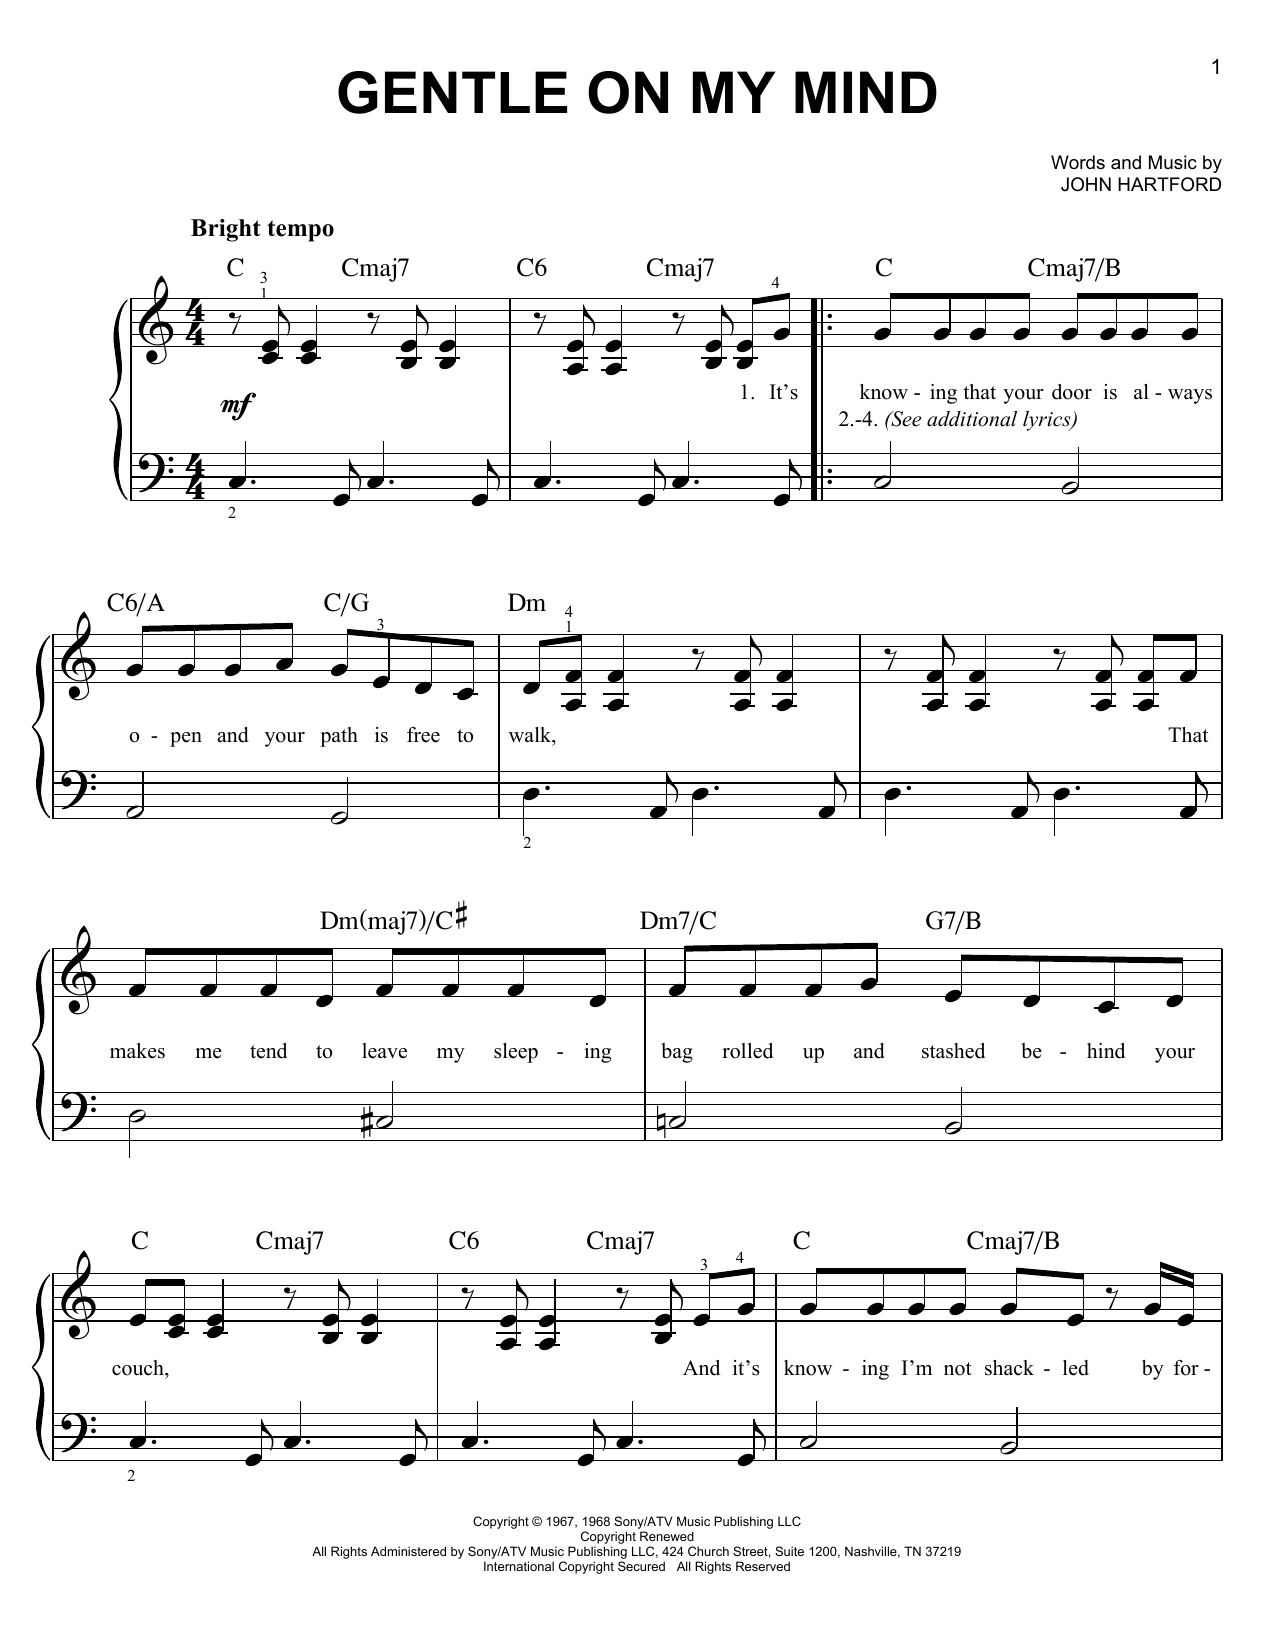 Glen Campbell Gentle On My Mind Sheet Music Notes & Chords for Baritone Ukulele - Download or Print PDF